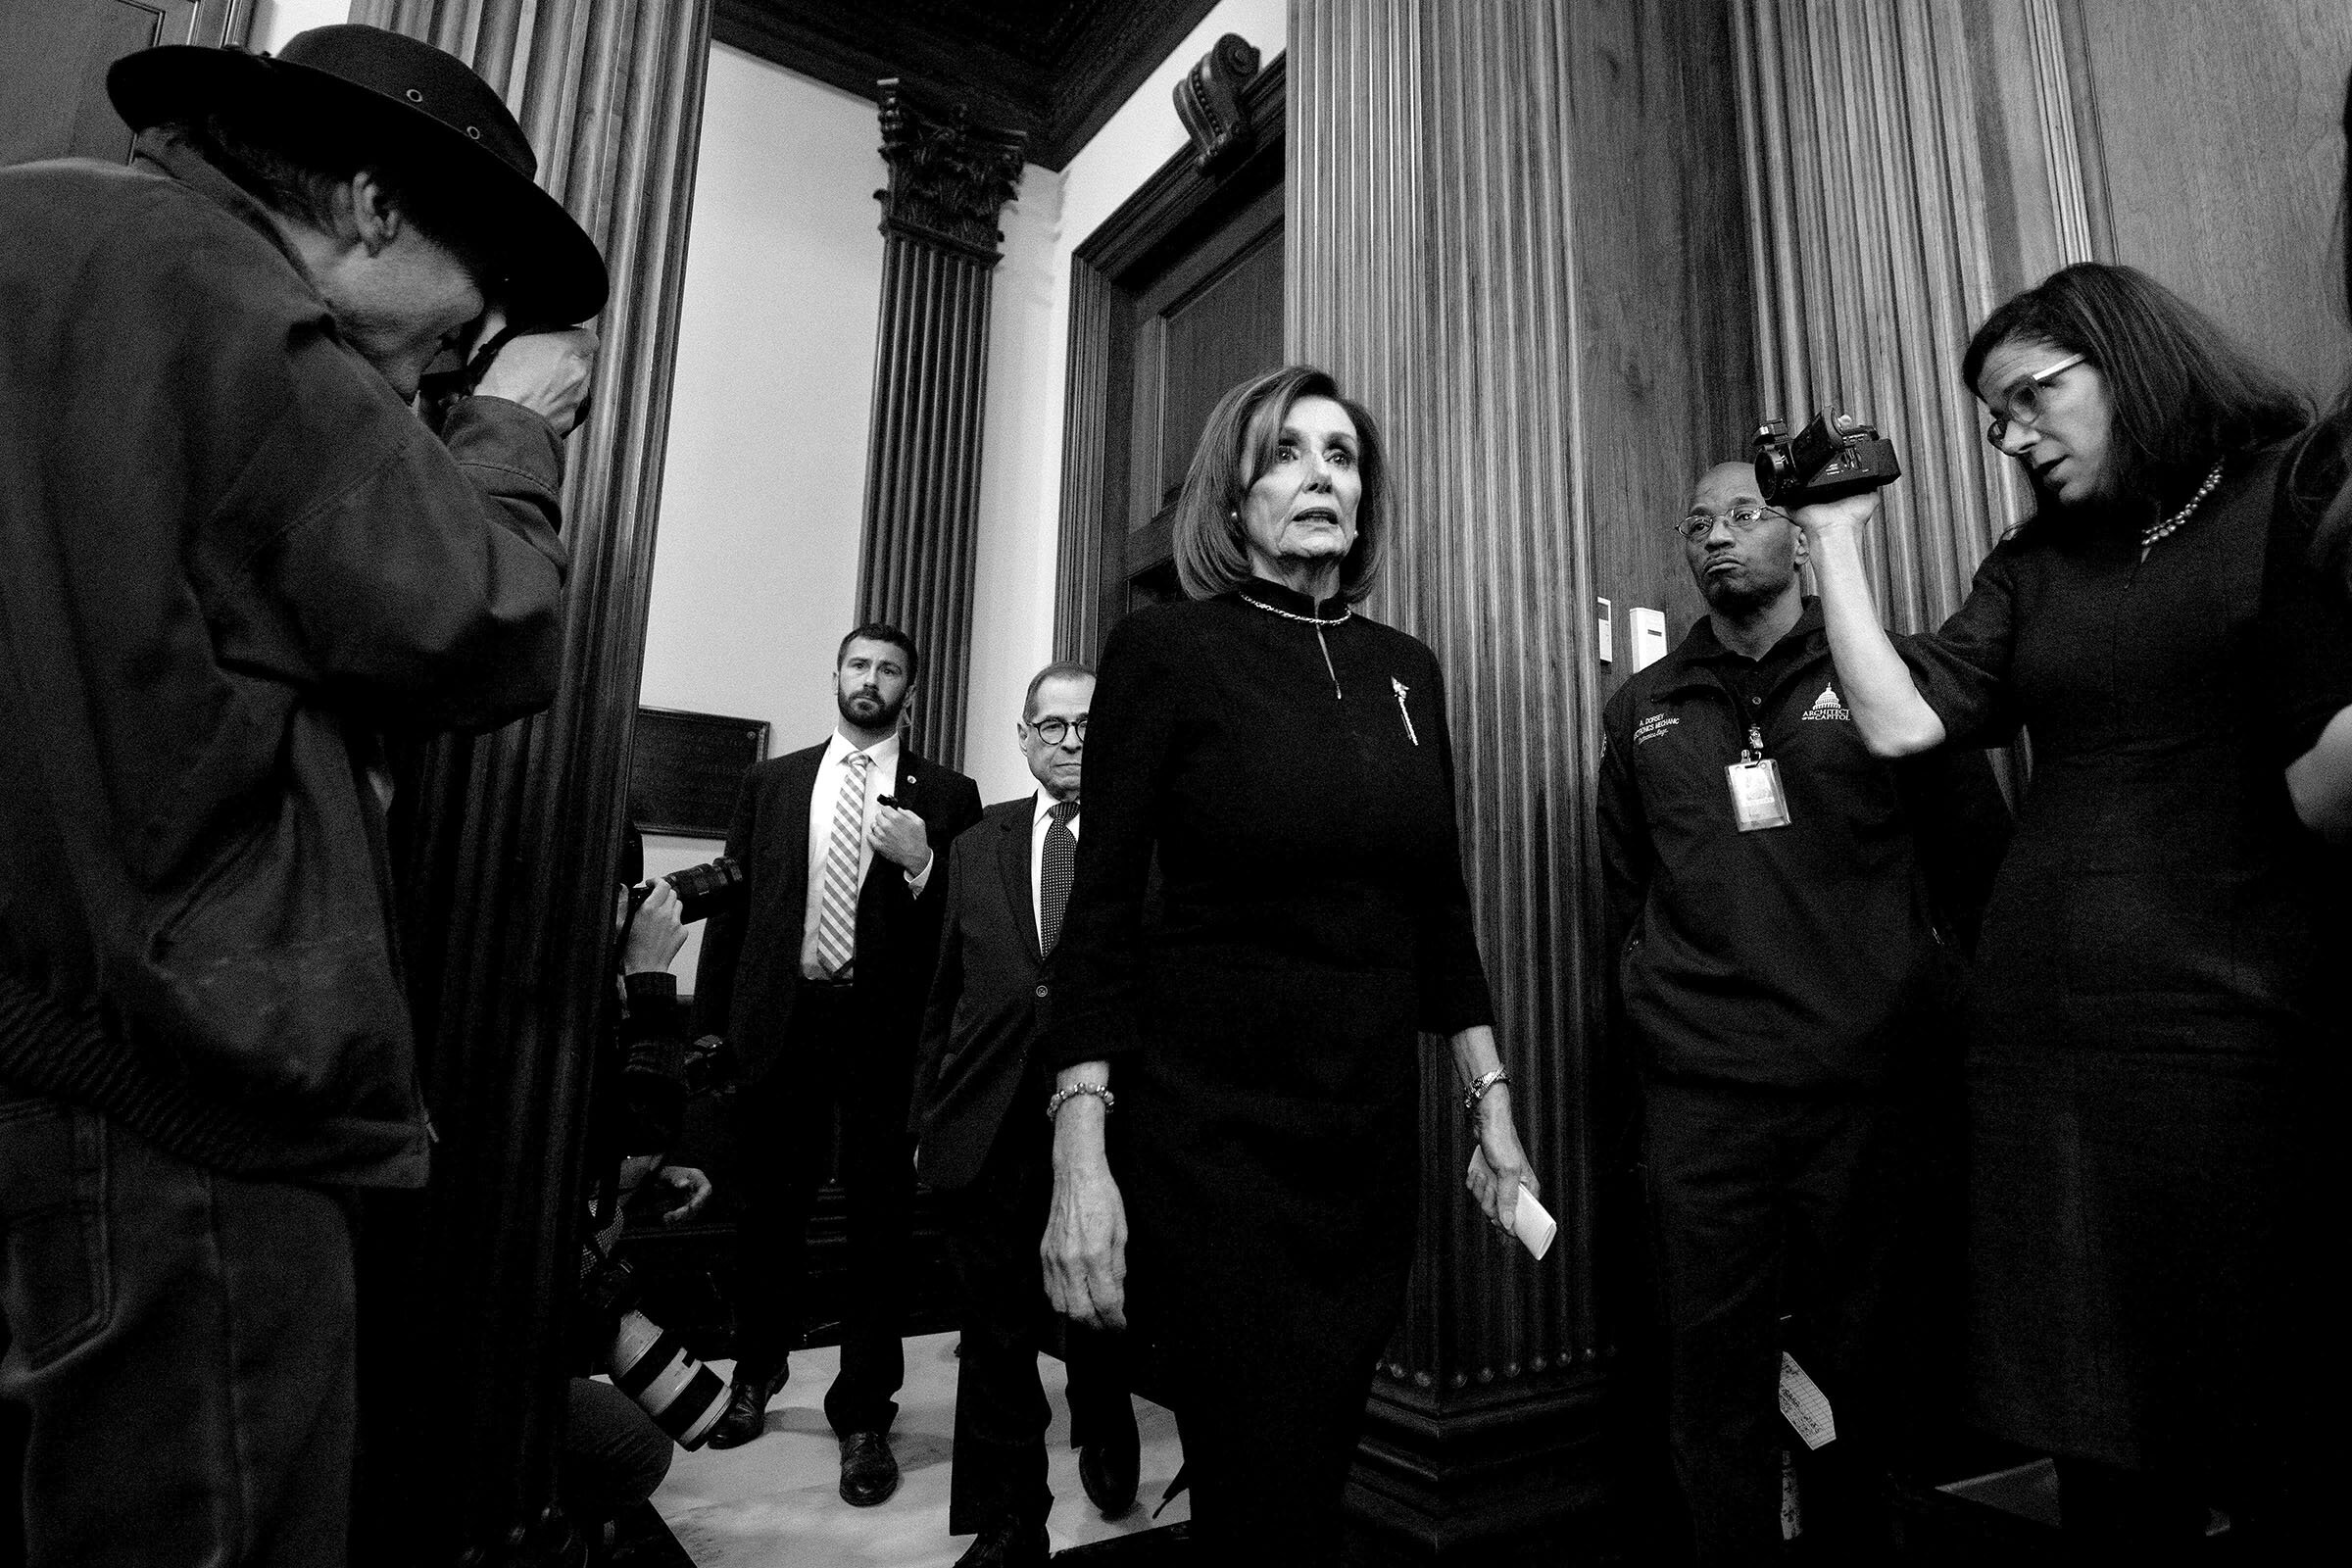 Washington D.C. 2020 - Nancy Pelosi during the impeachment hearings.